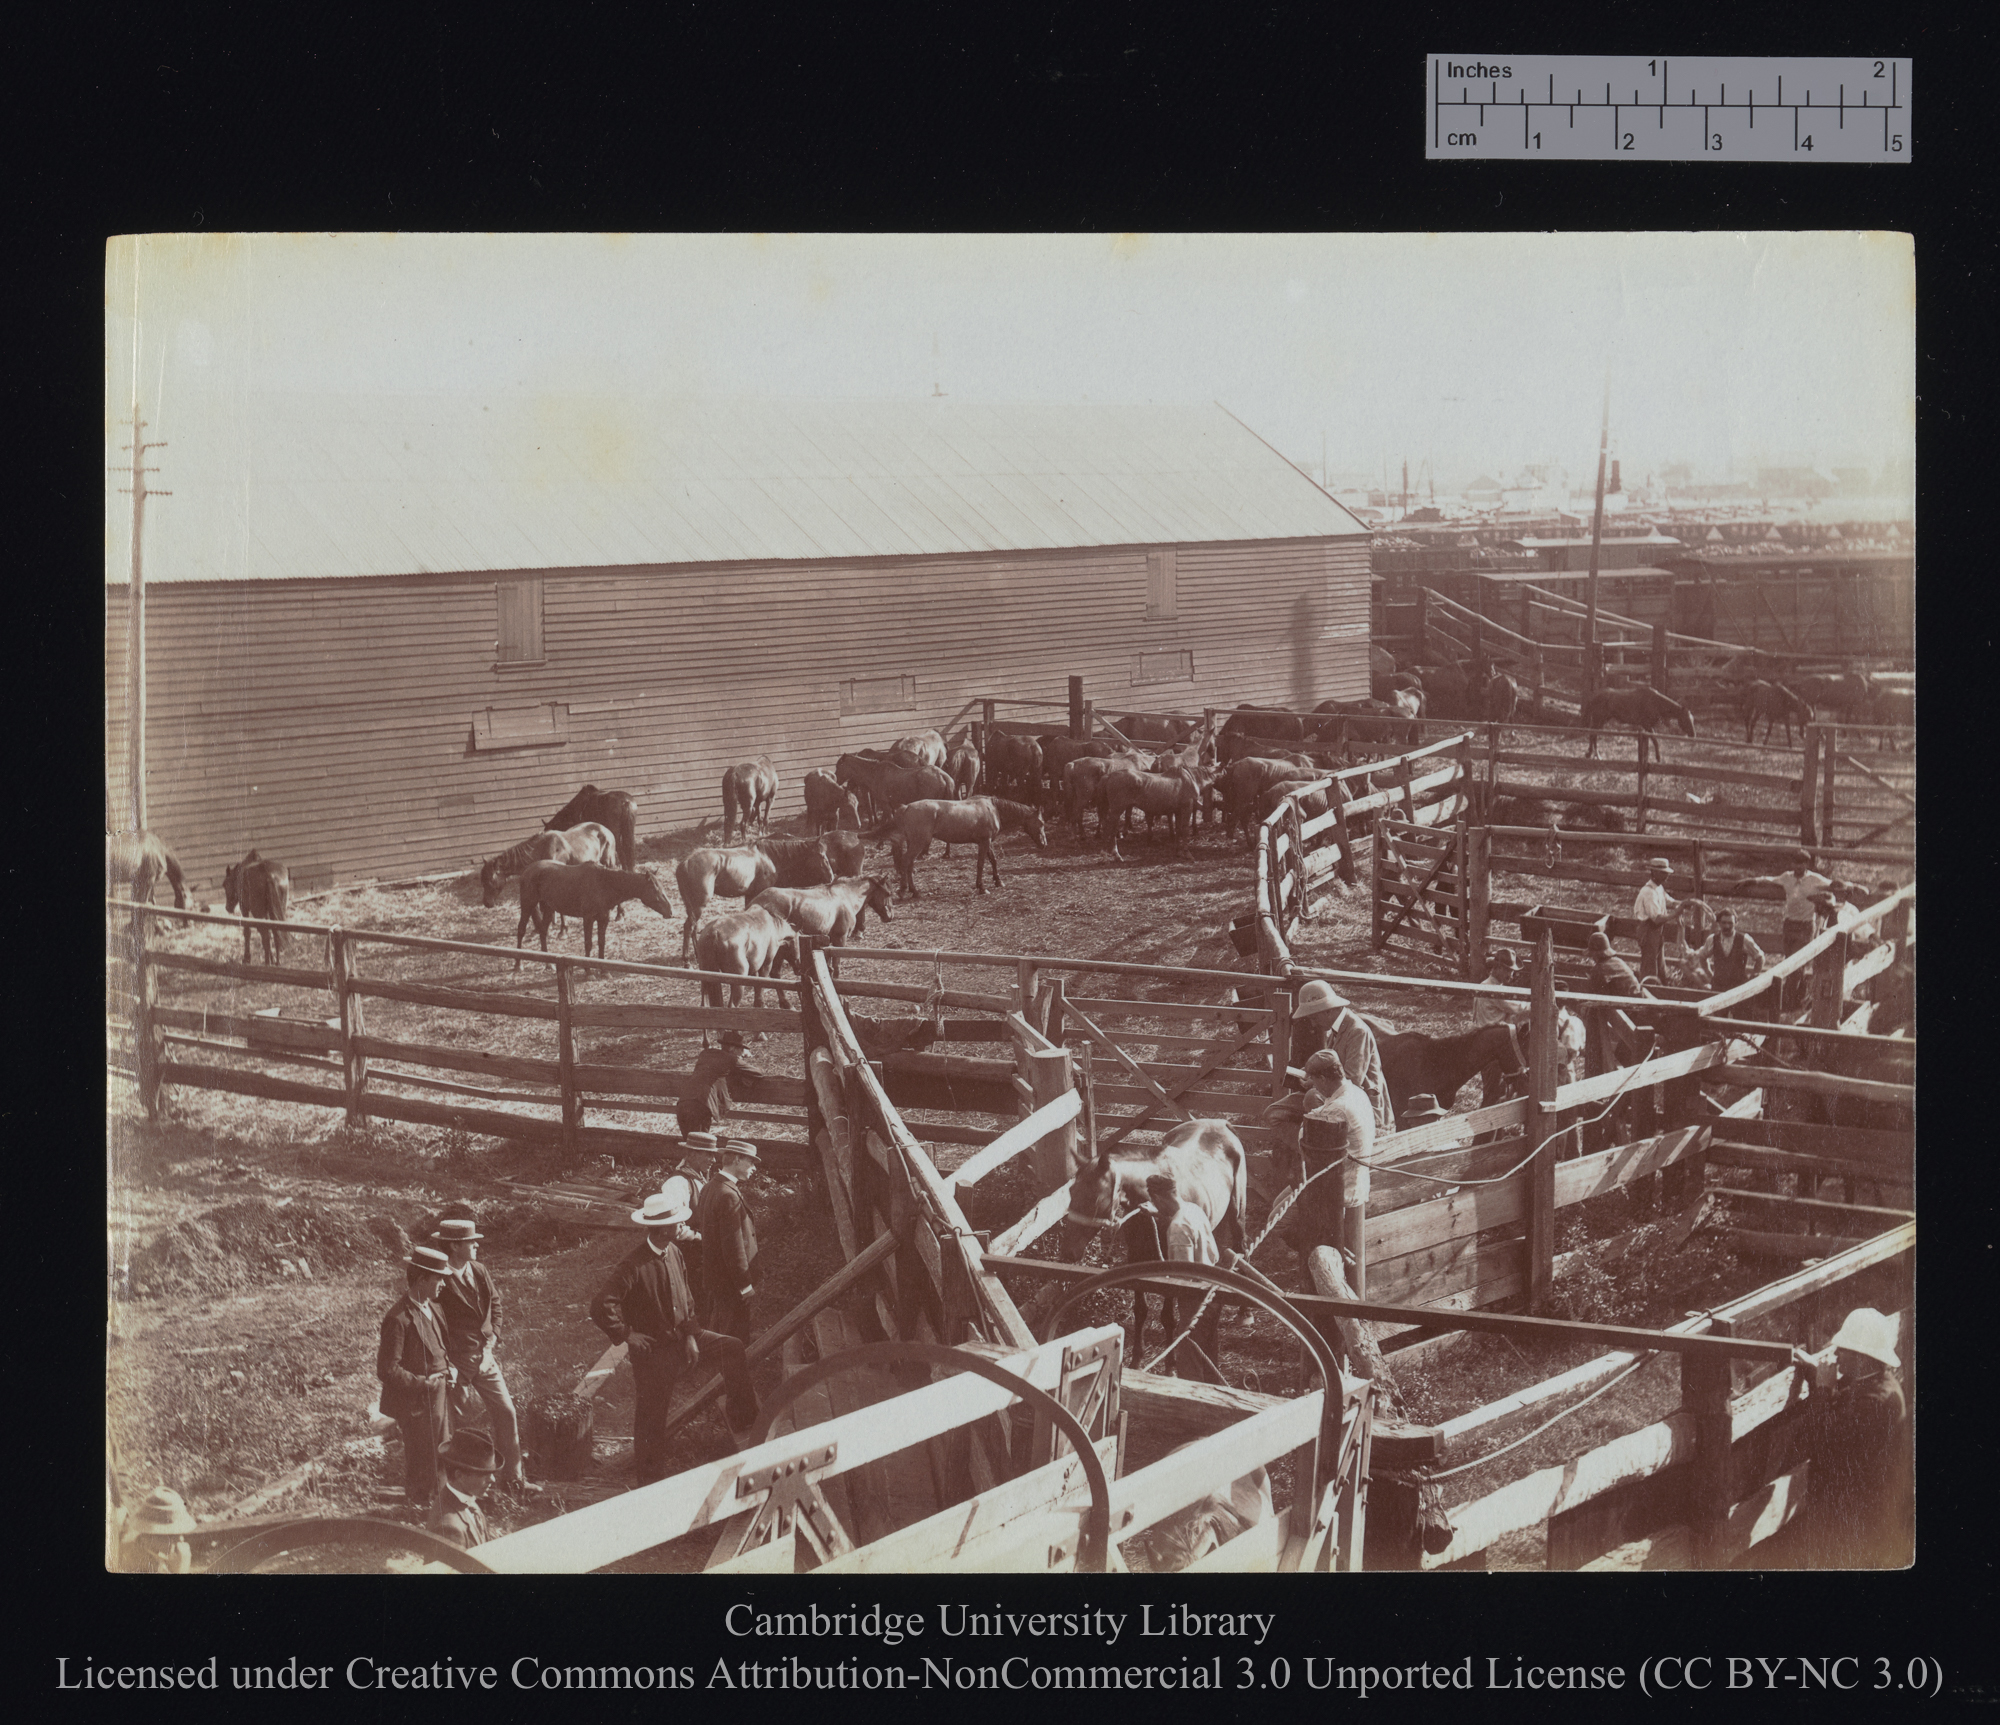 [Horse corrals on shore], 1899 - 1901